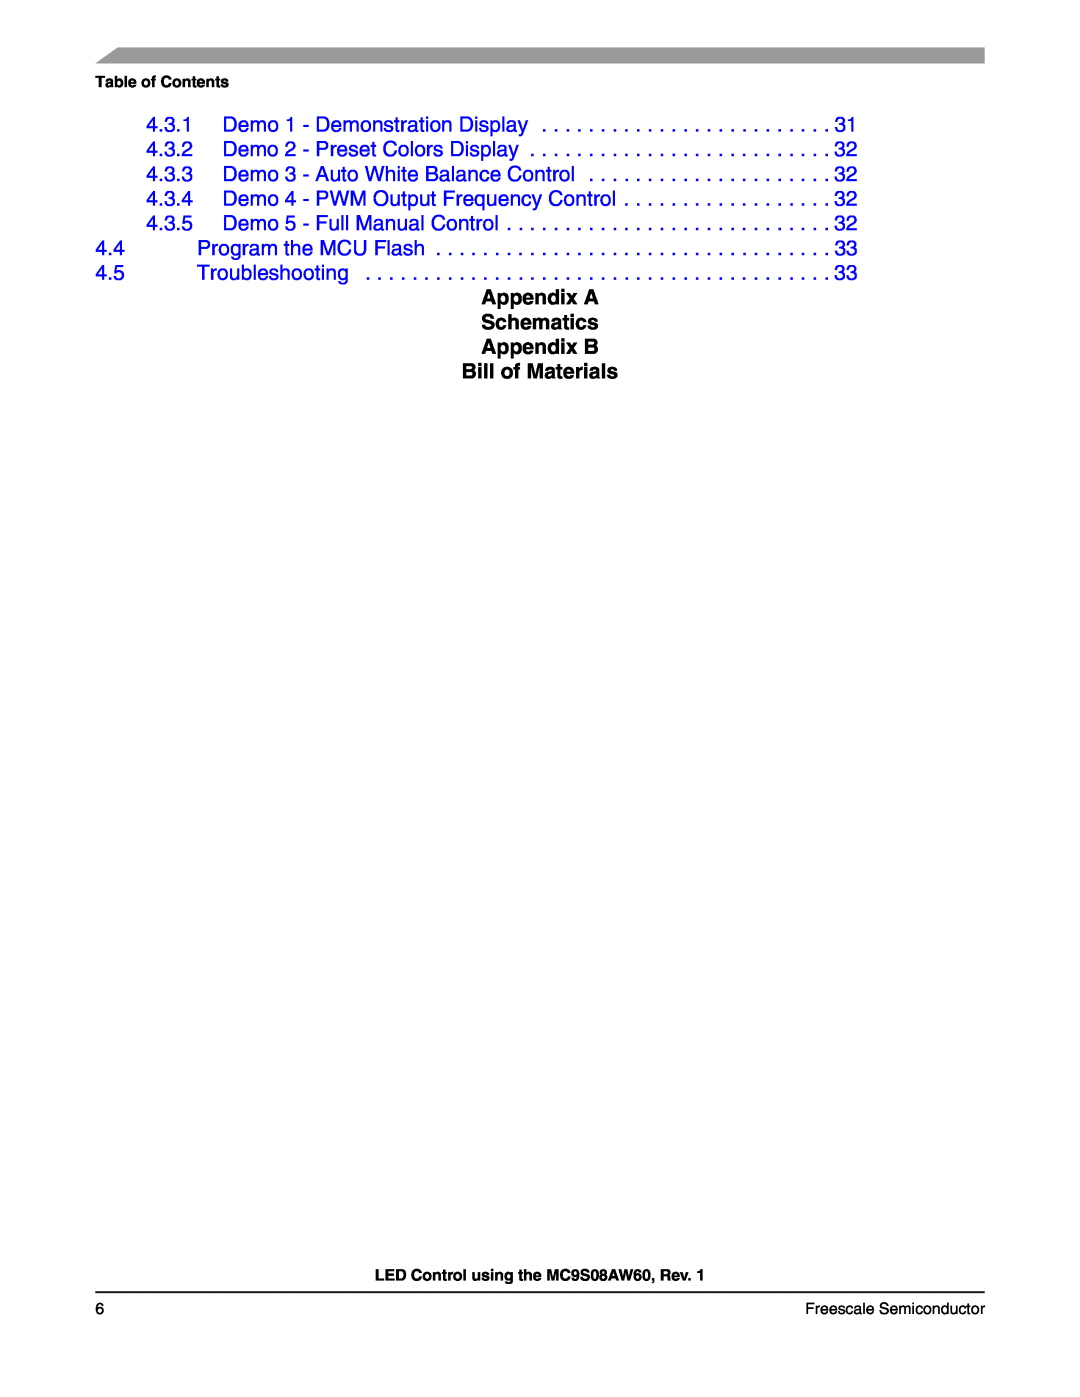 Freescale Semiconductor S08 manual Appendix A Schematics Appendix B Bill of Materials 